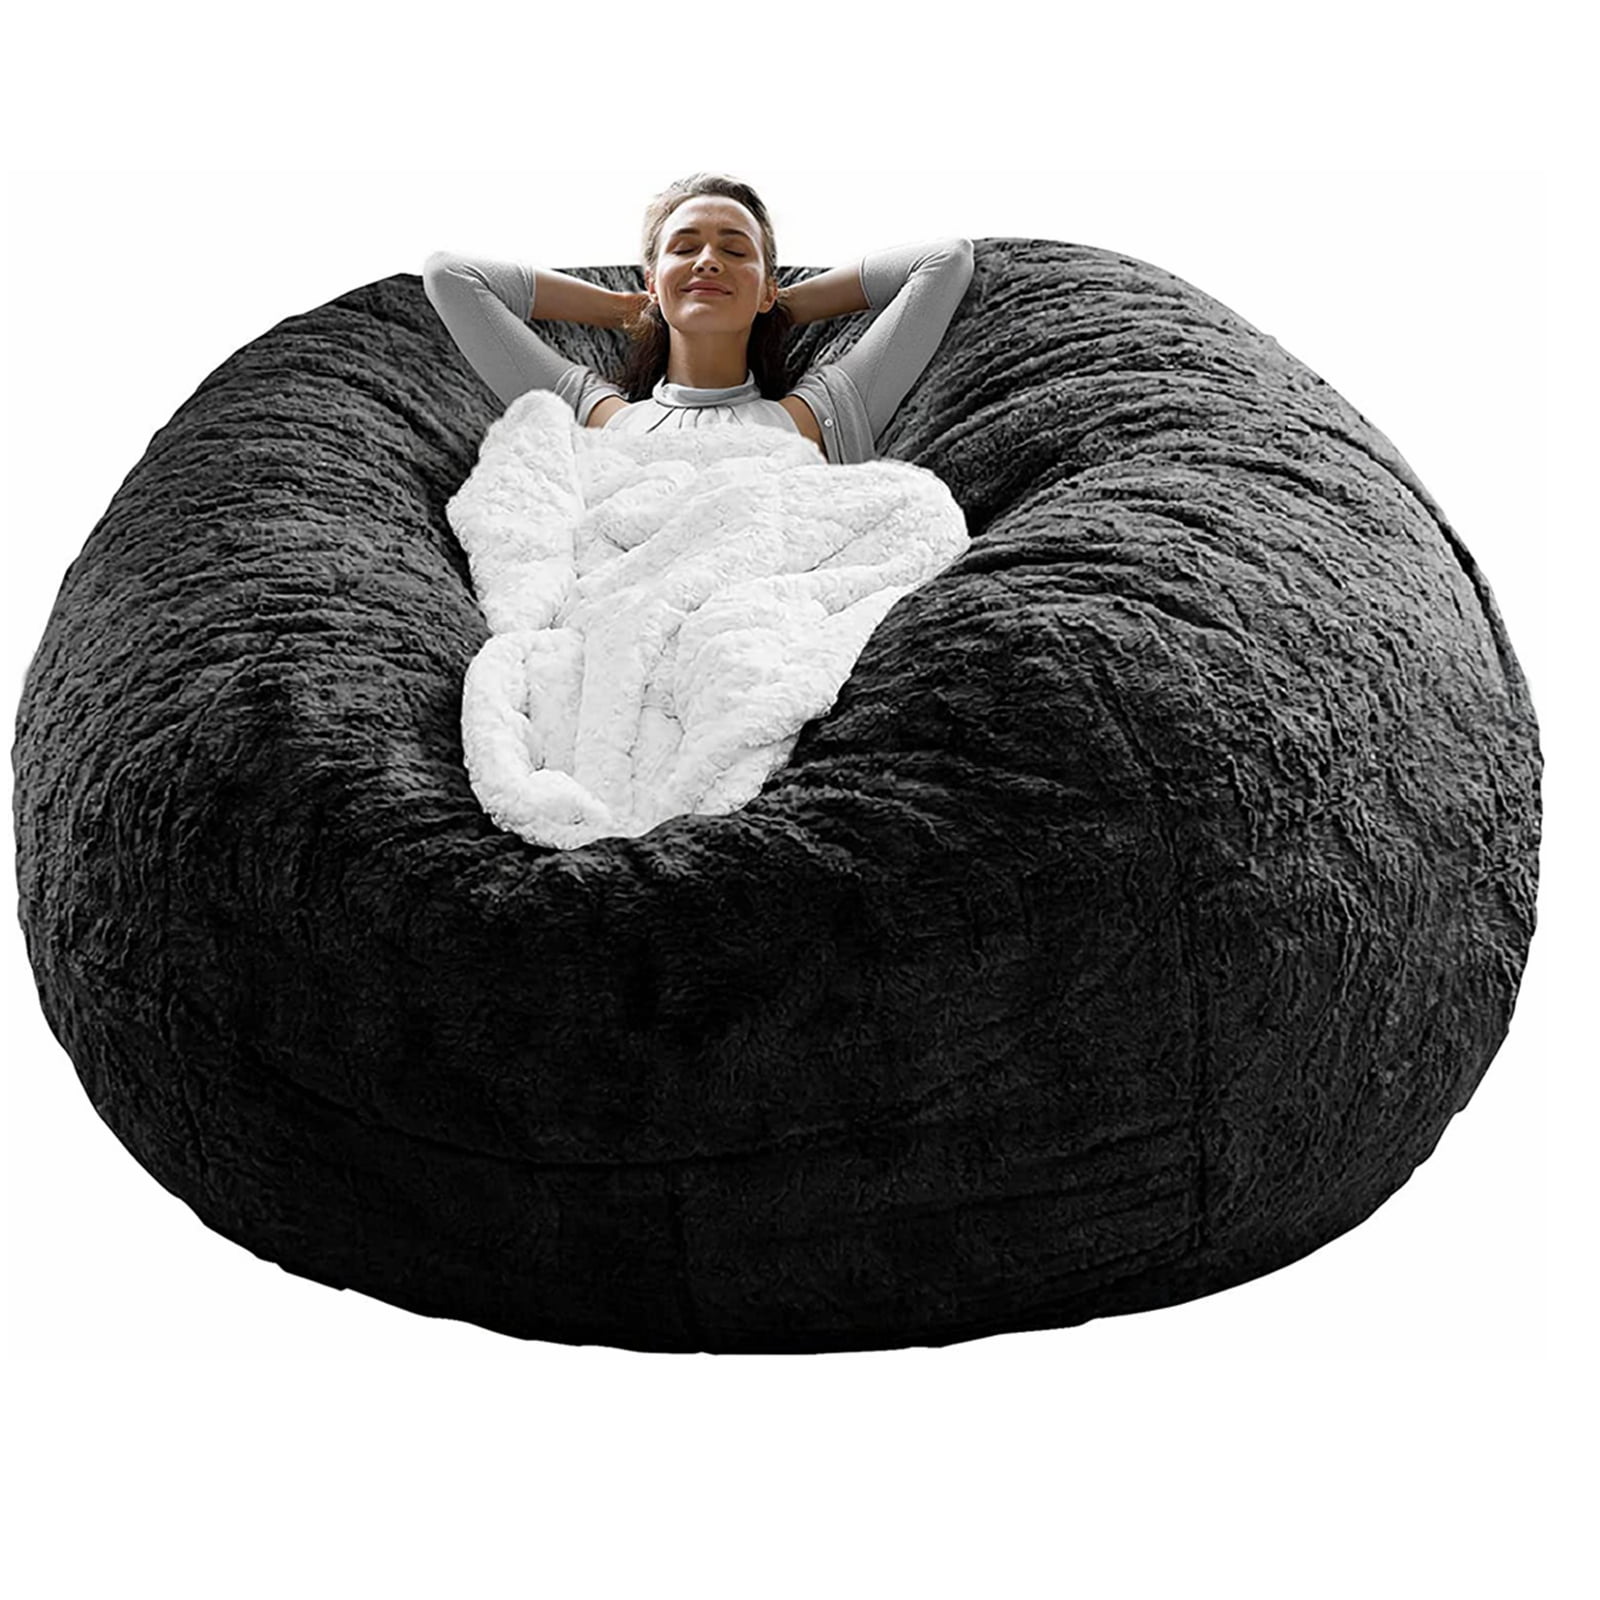 deladola 7ft Bean Bag Cover(No Filler,Cover Only) Big Storage Sofa Chair Soft Fluffy Fur Portable Living Room Sofa Bed Cover (Black)